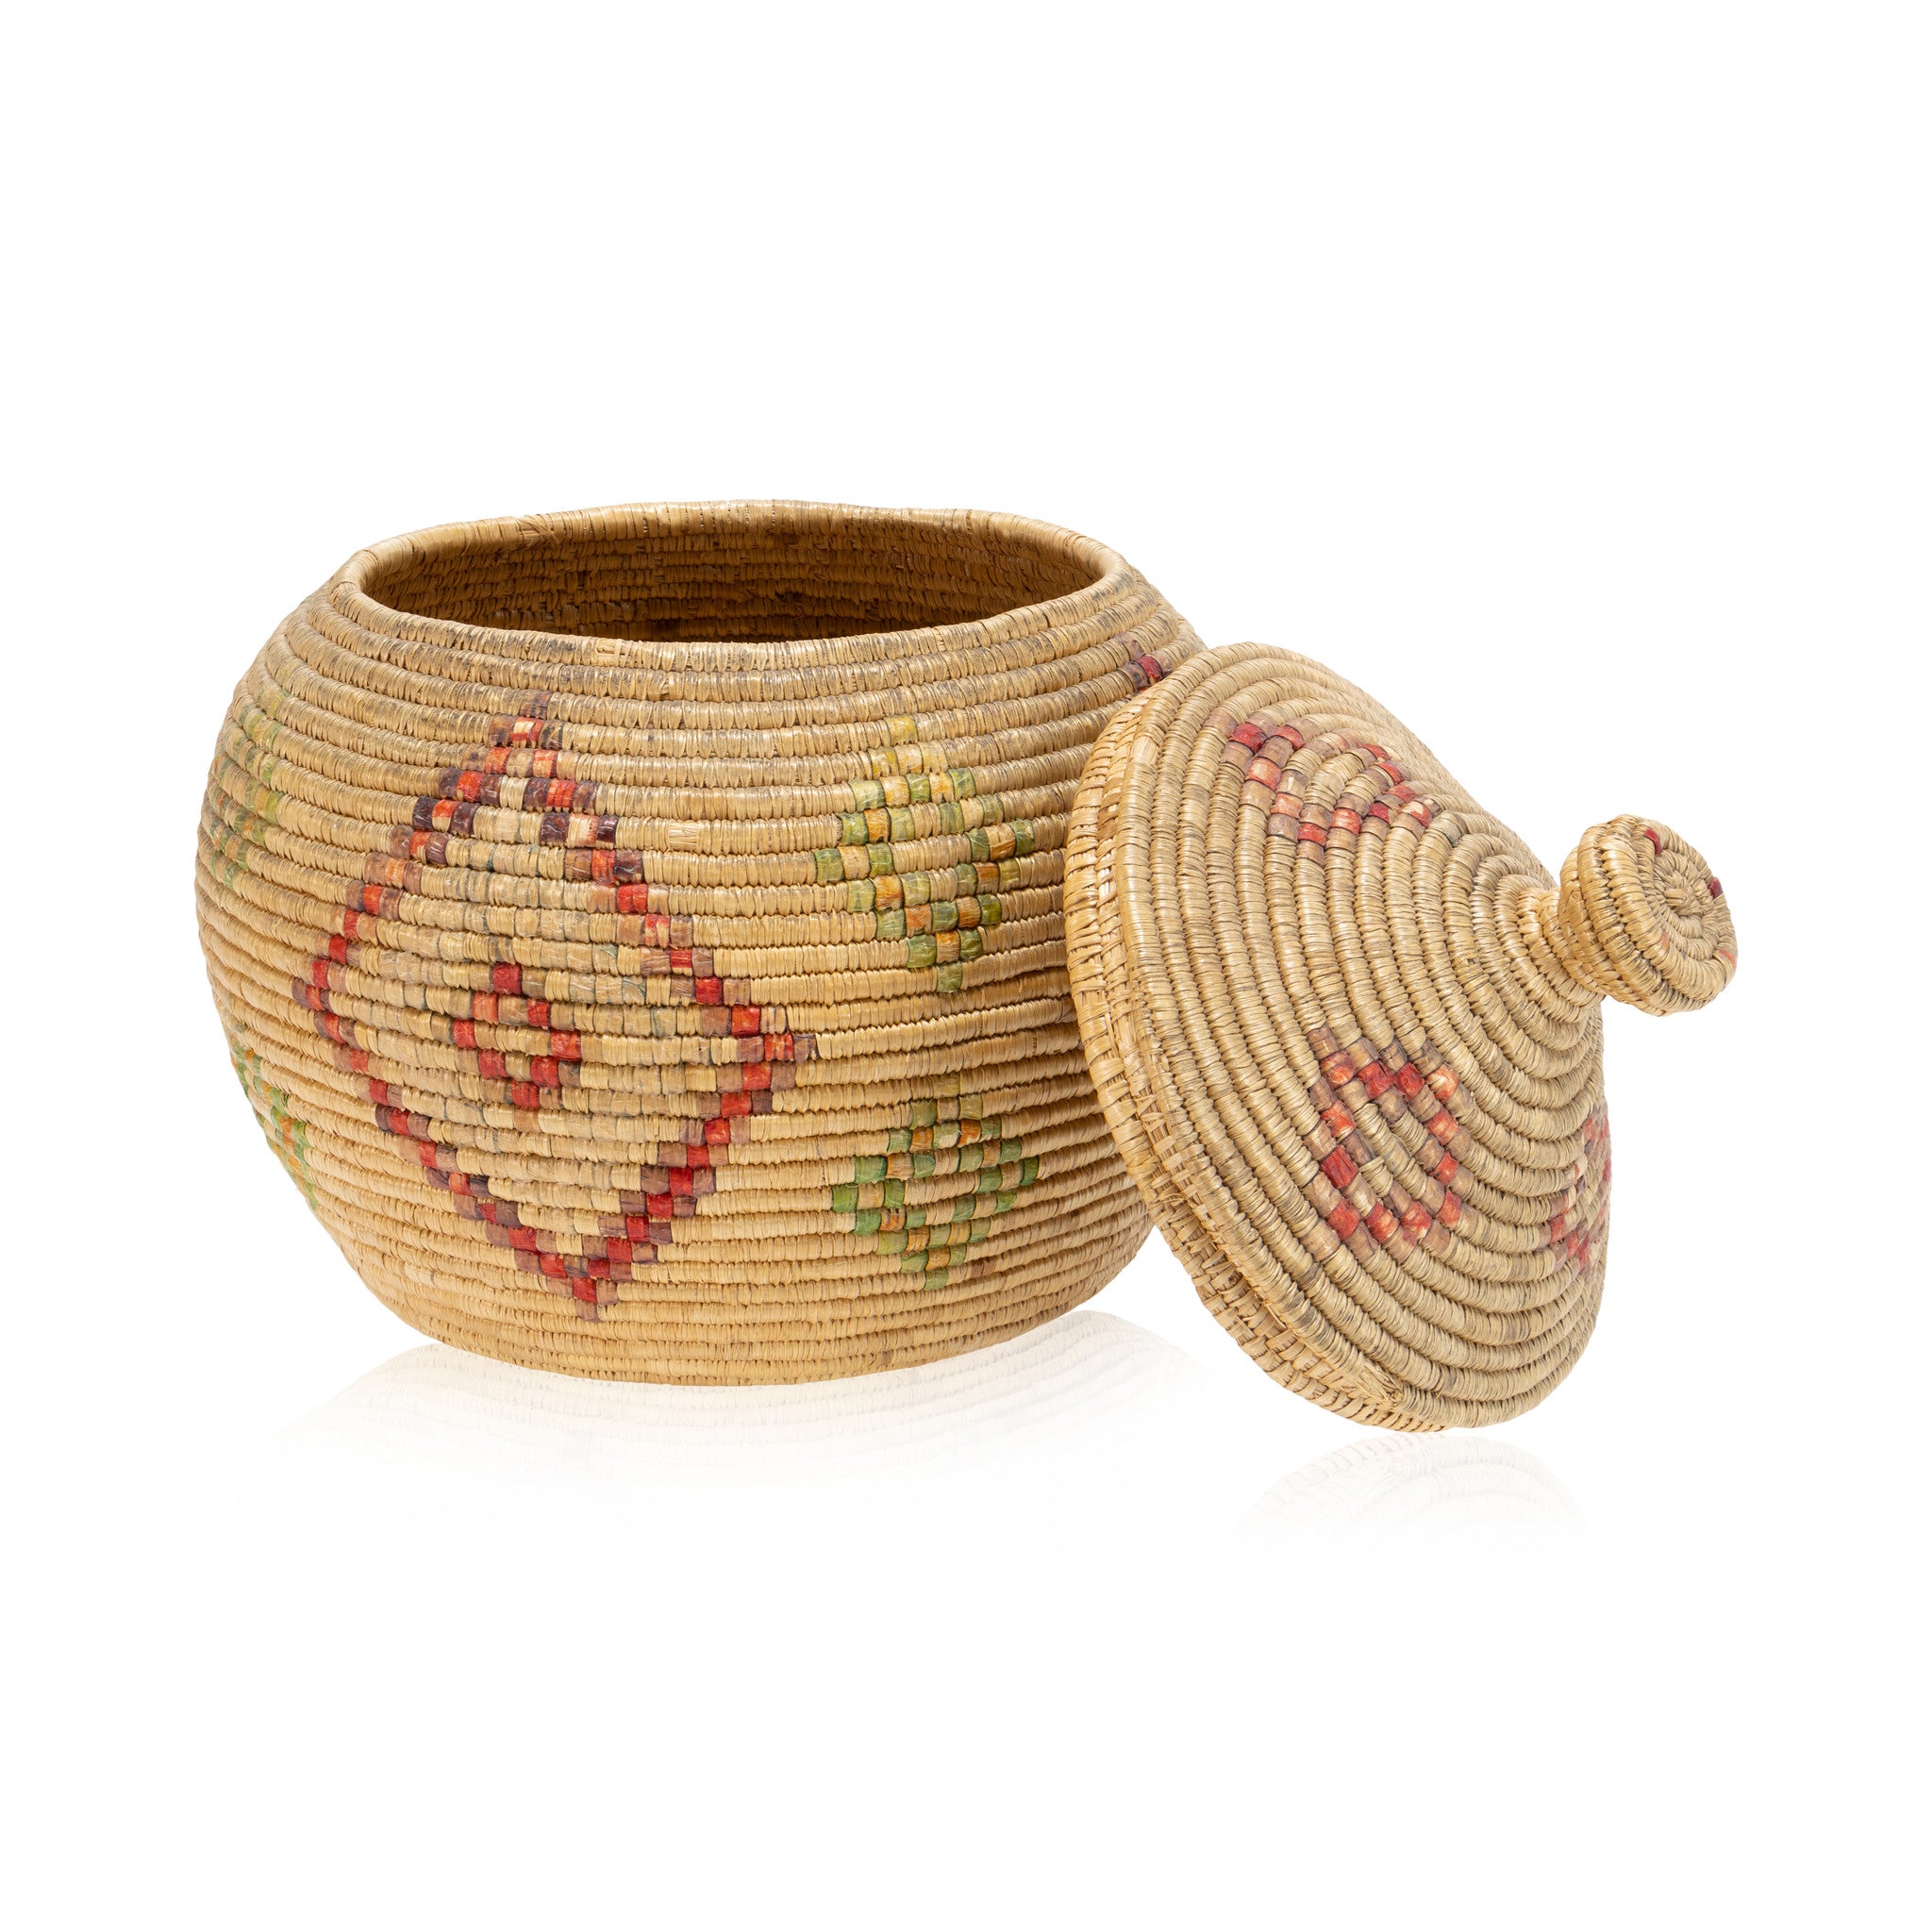 Eskimo Basket with Lid, Native, Basketry, Vertical